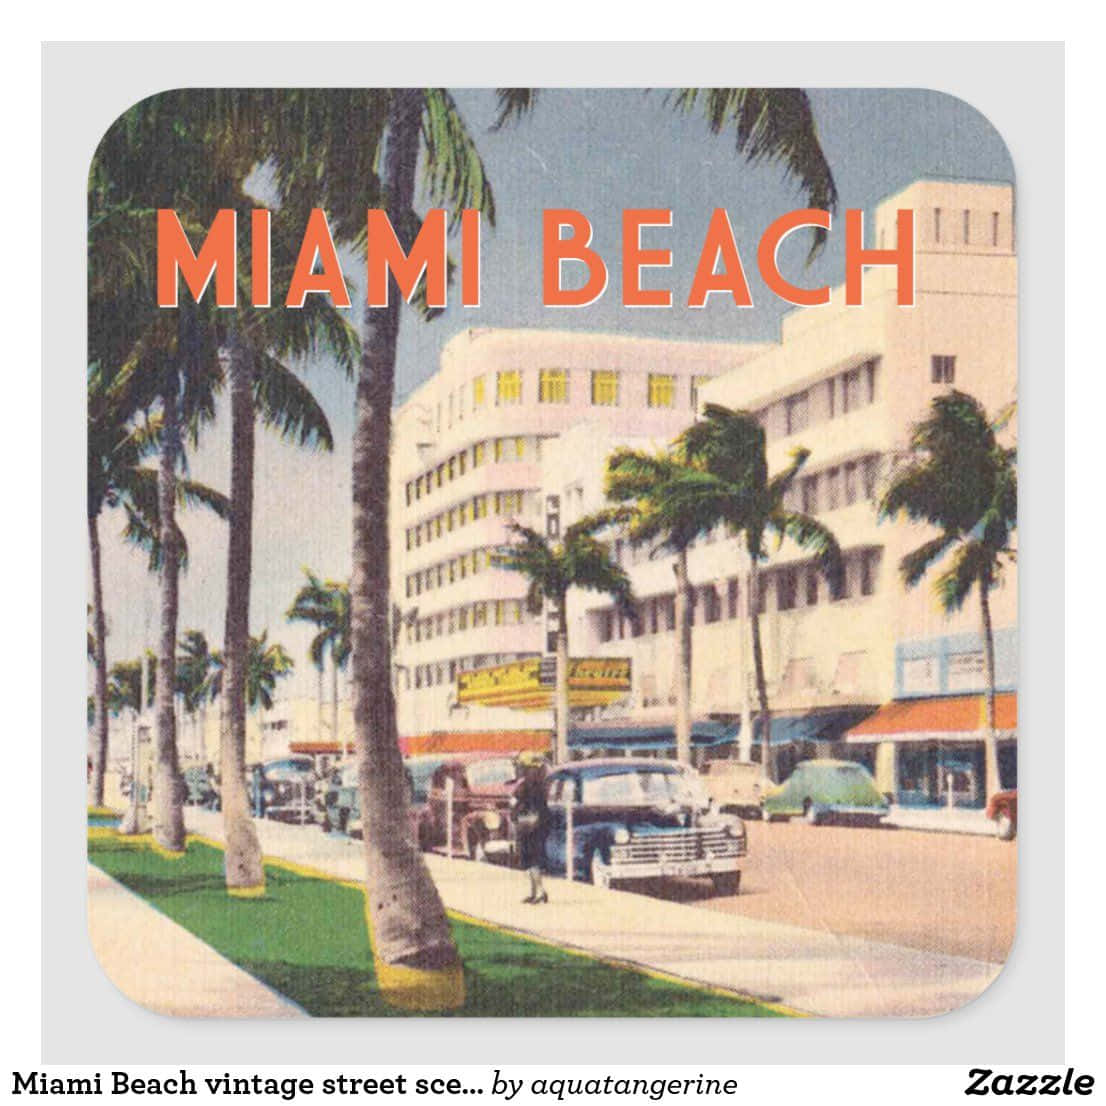 Experience the nostalgia of Miami in its retro days. Wallpaper